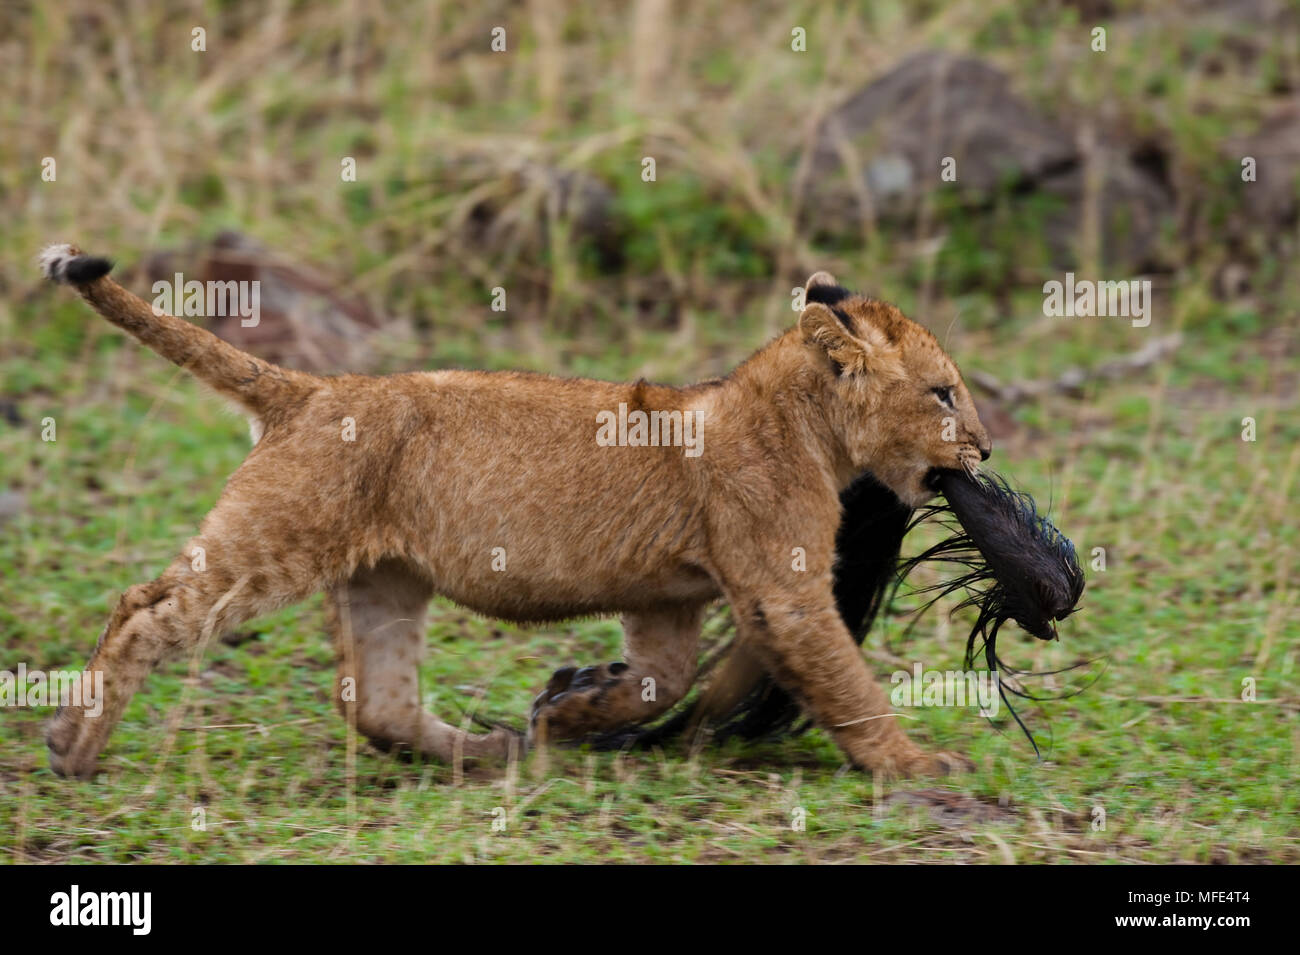 Un lion cub joue avec la queue d'un des gnous, Panthera leo, Masai Mara, Kenya. Banque D'Images